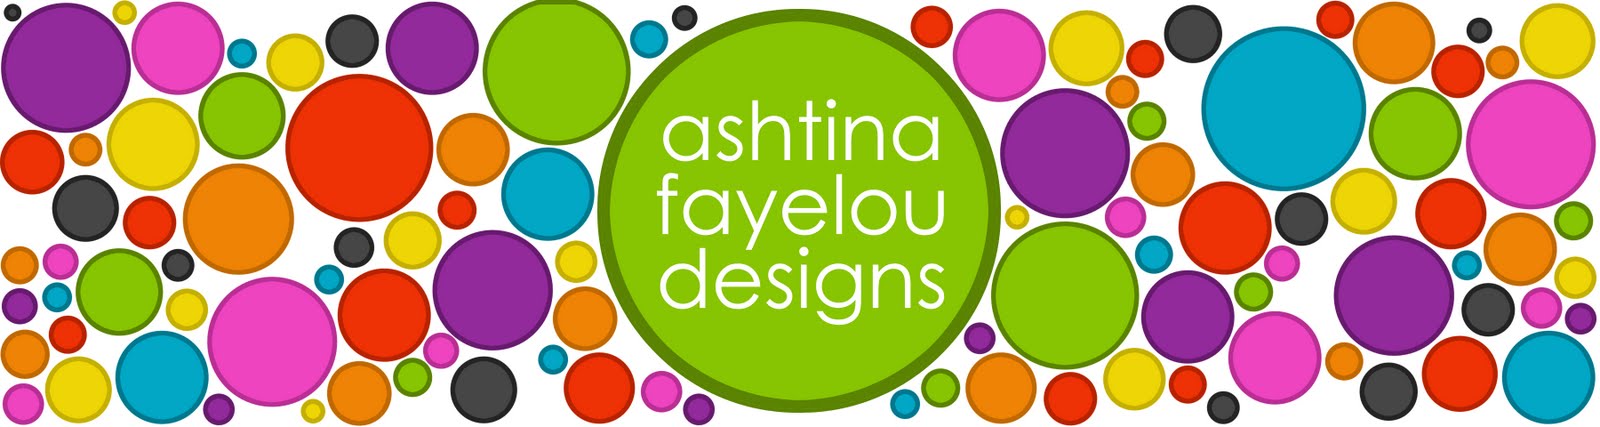 ashtina fayelou designs